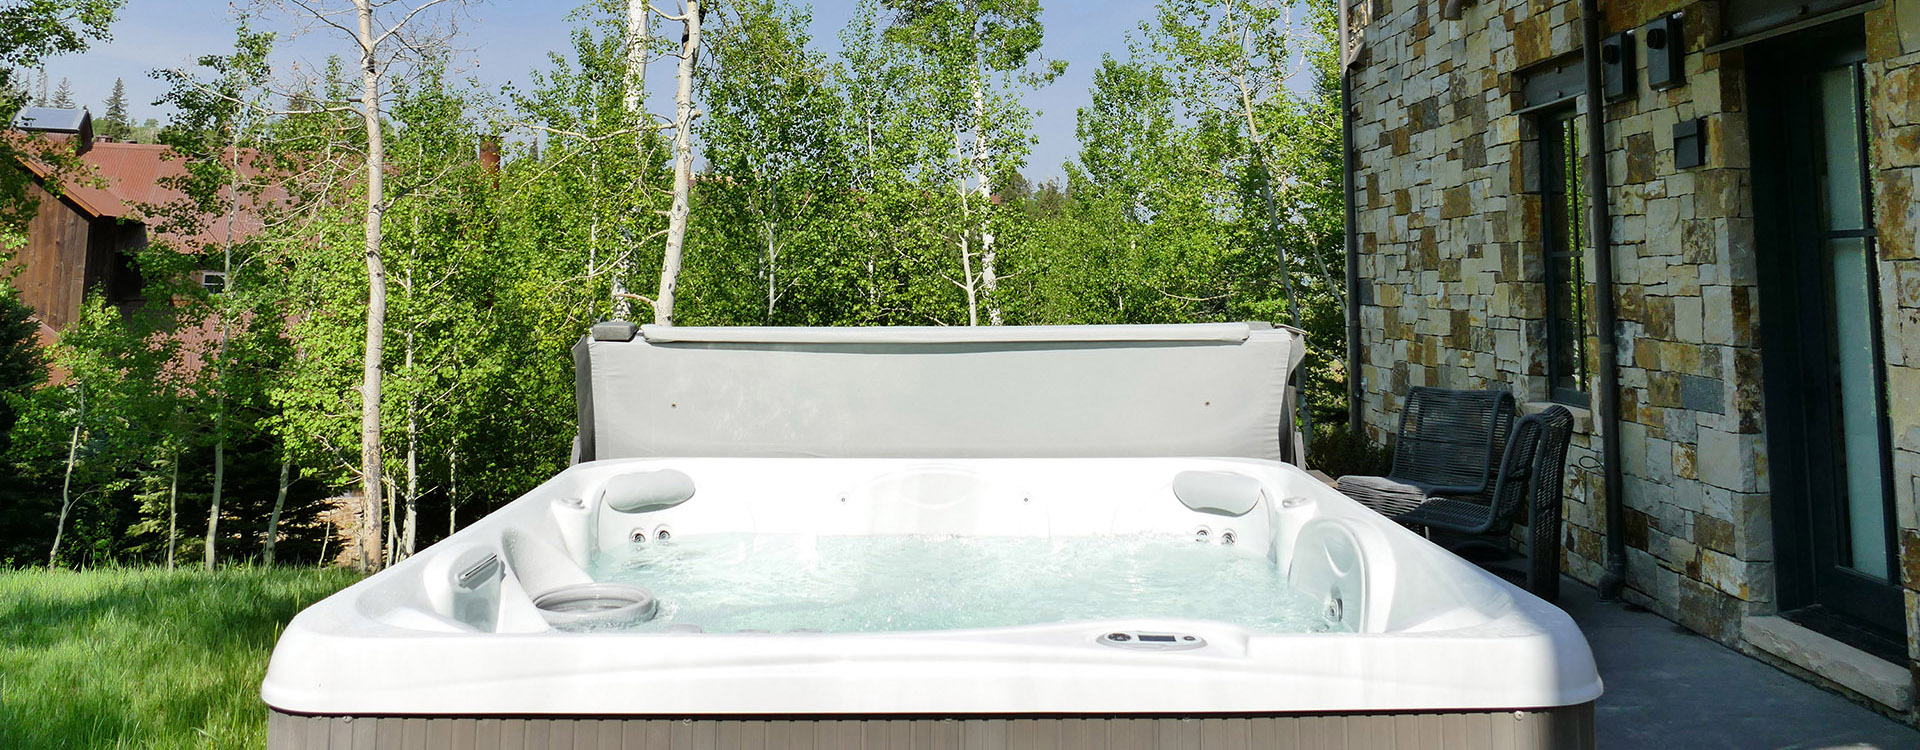 12.03-telluride-open-oasis-hot-tub